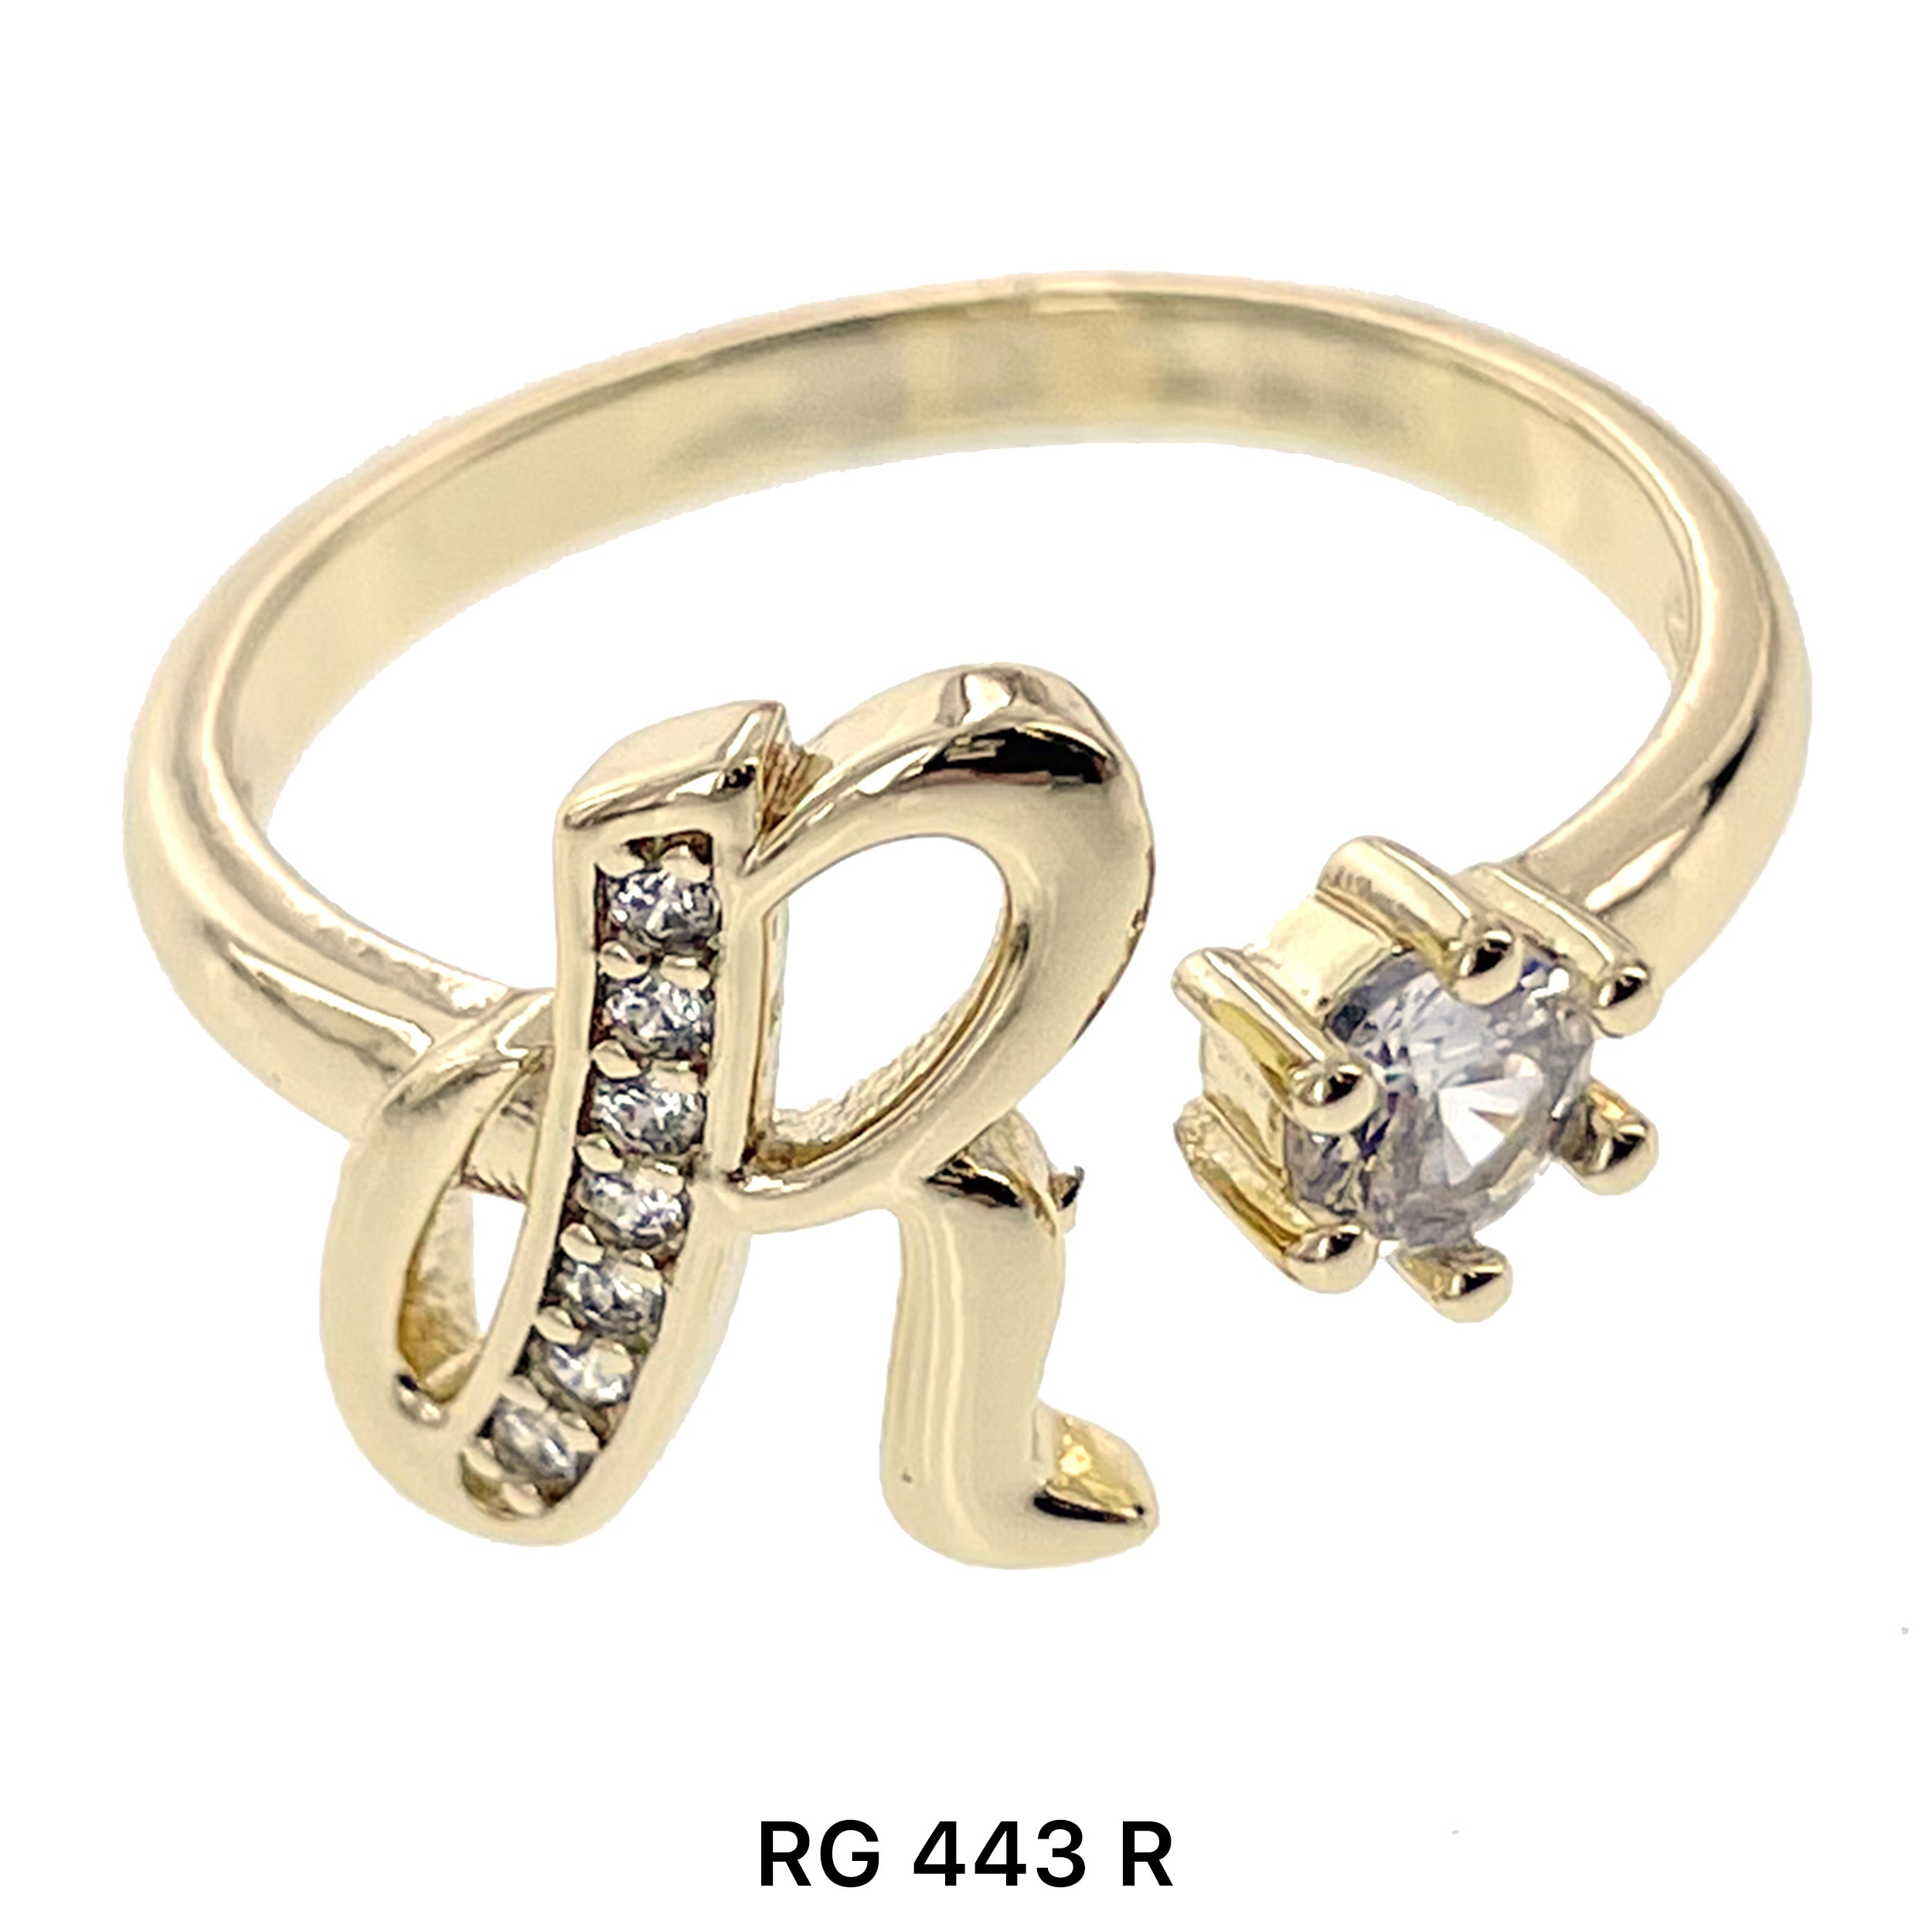 Initial Adjustable Ring RG 443 R